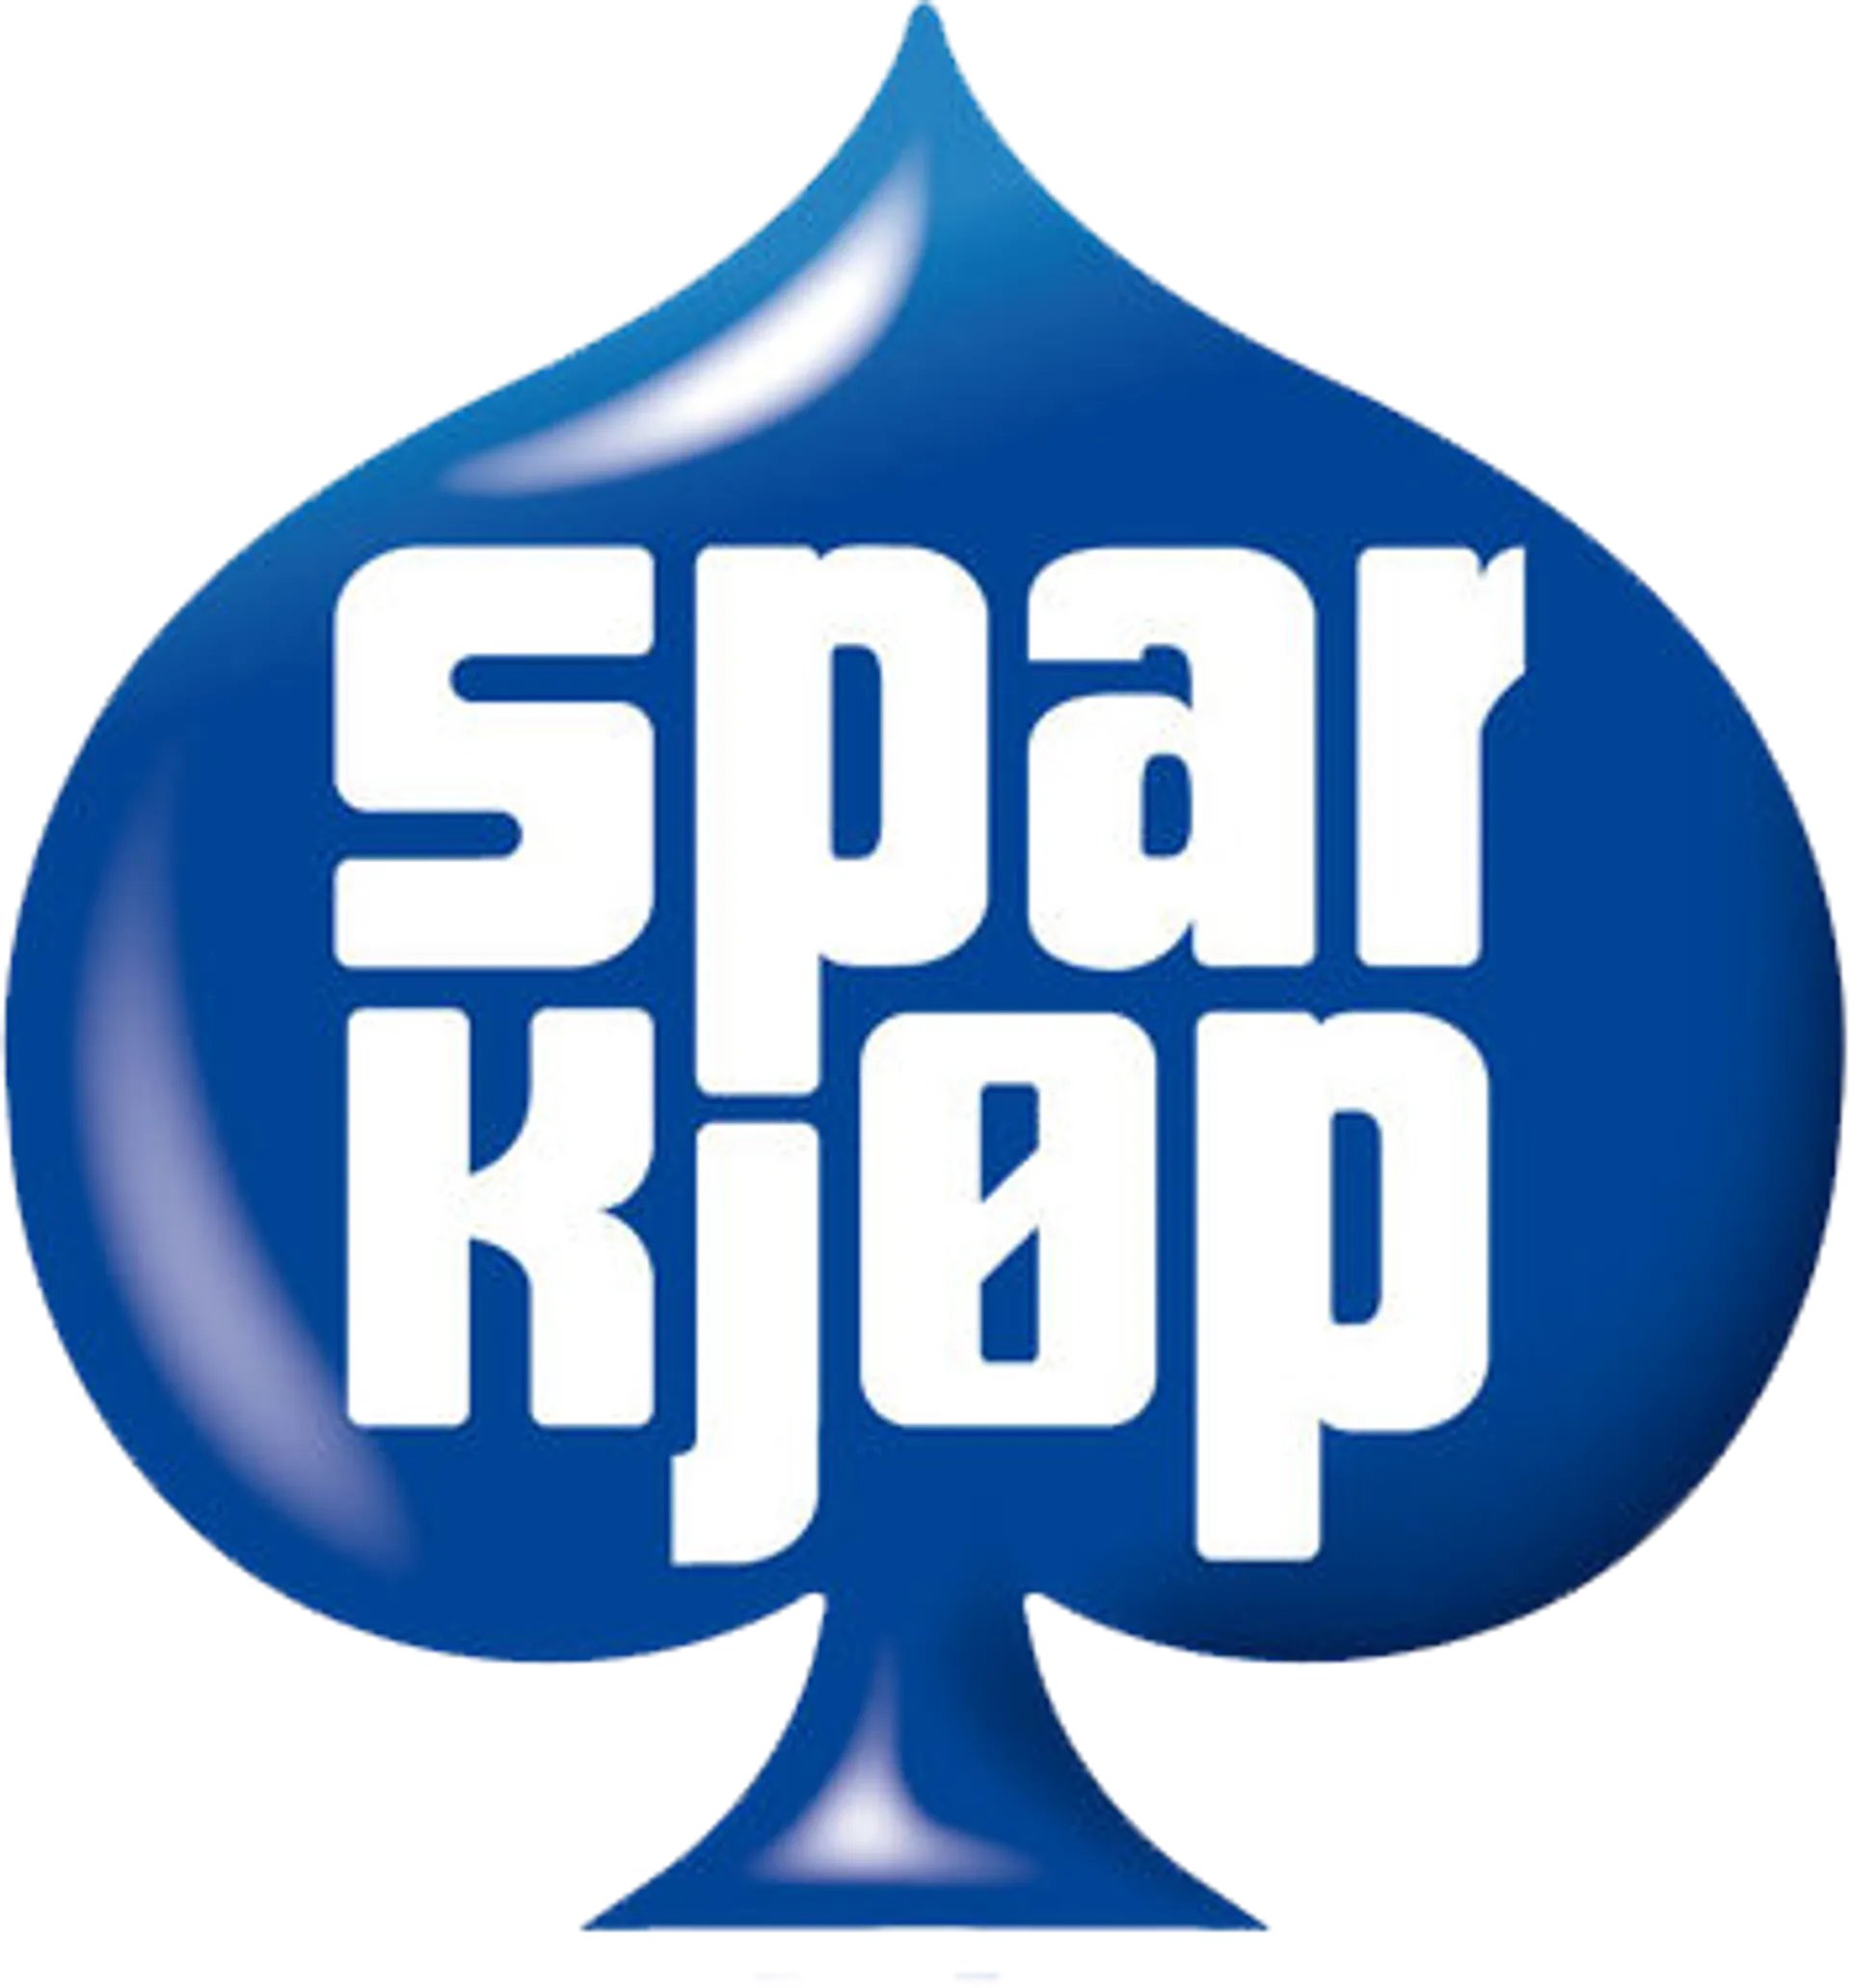 SPARKOP logo